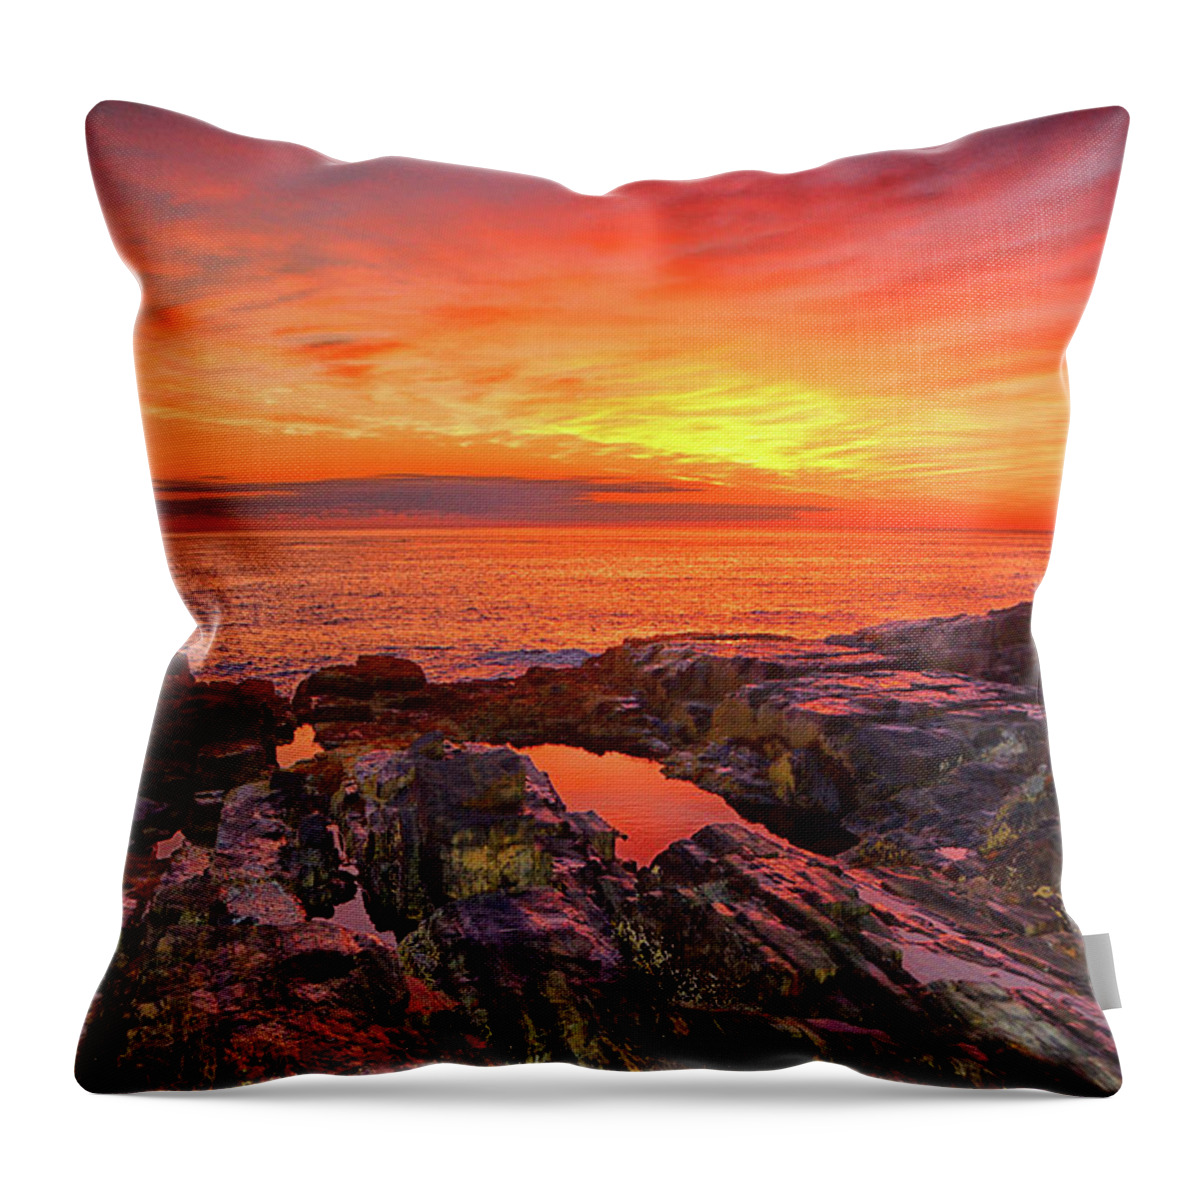 Cape Neddick Sunrise Throw Pillow featuring the photograph Cape Neddick Sunrise by Raymond Salani III